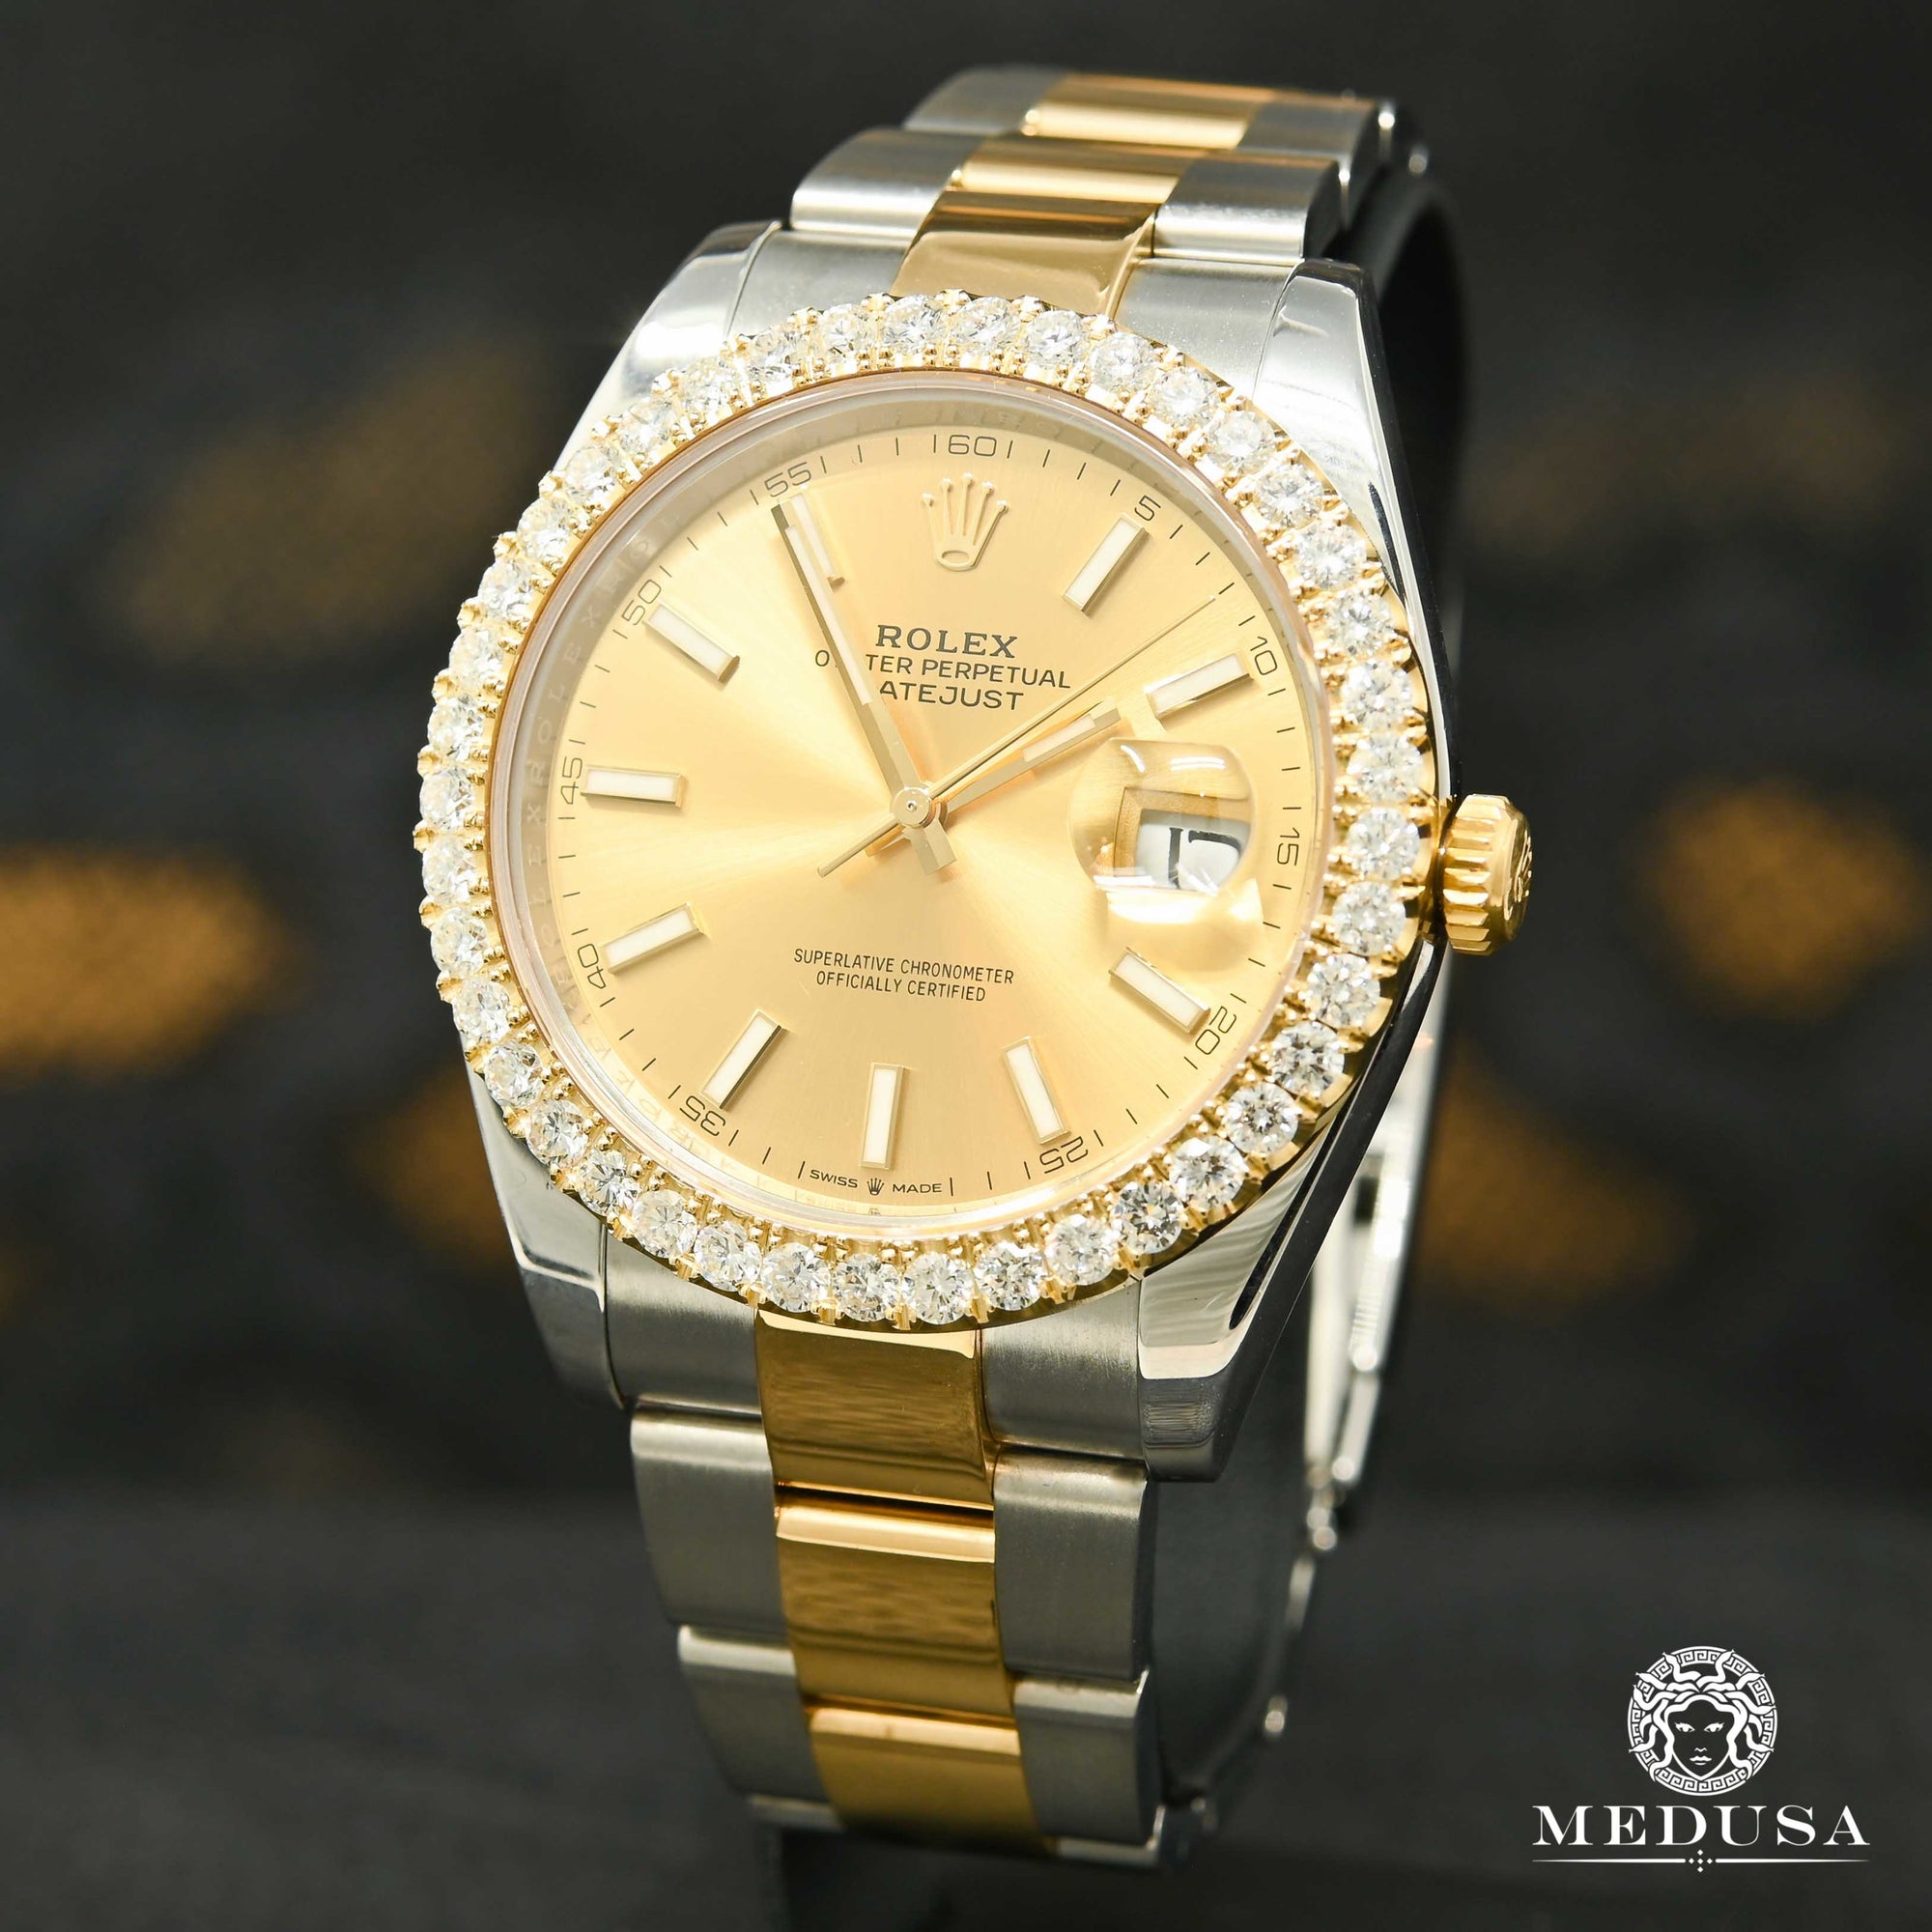 Rolex watch | Rolex Datejust Men's Watch 41mm - Oyster Champagne Iced Gold 2 Tones